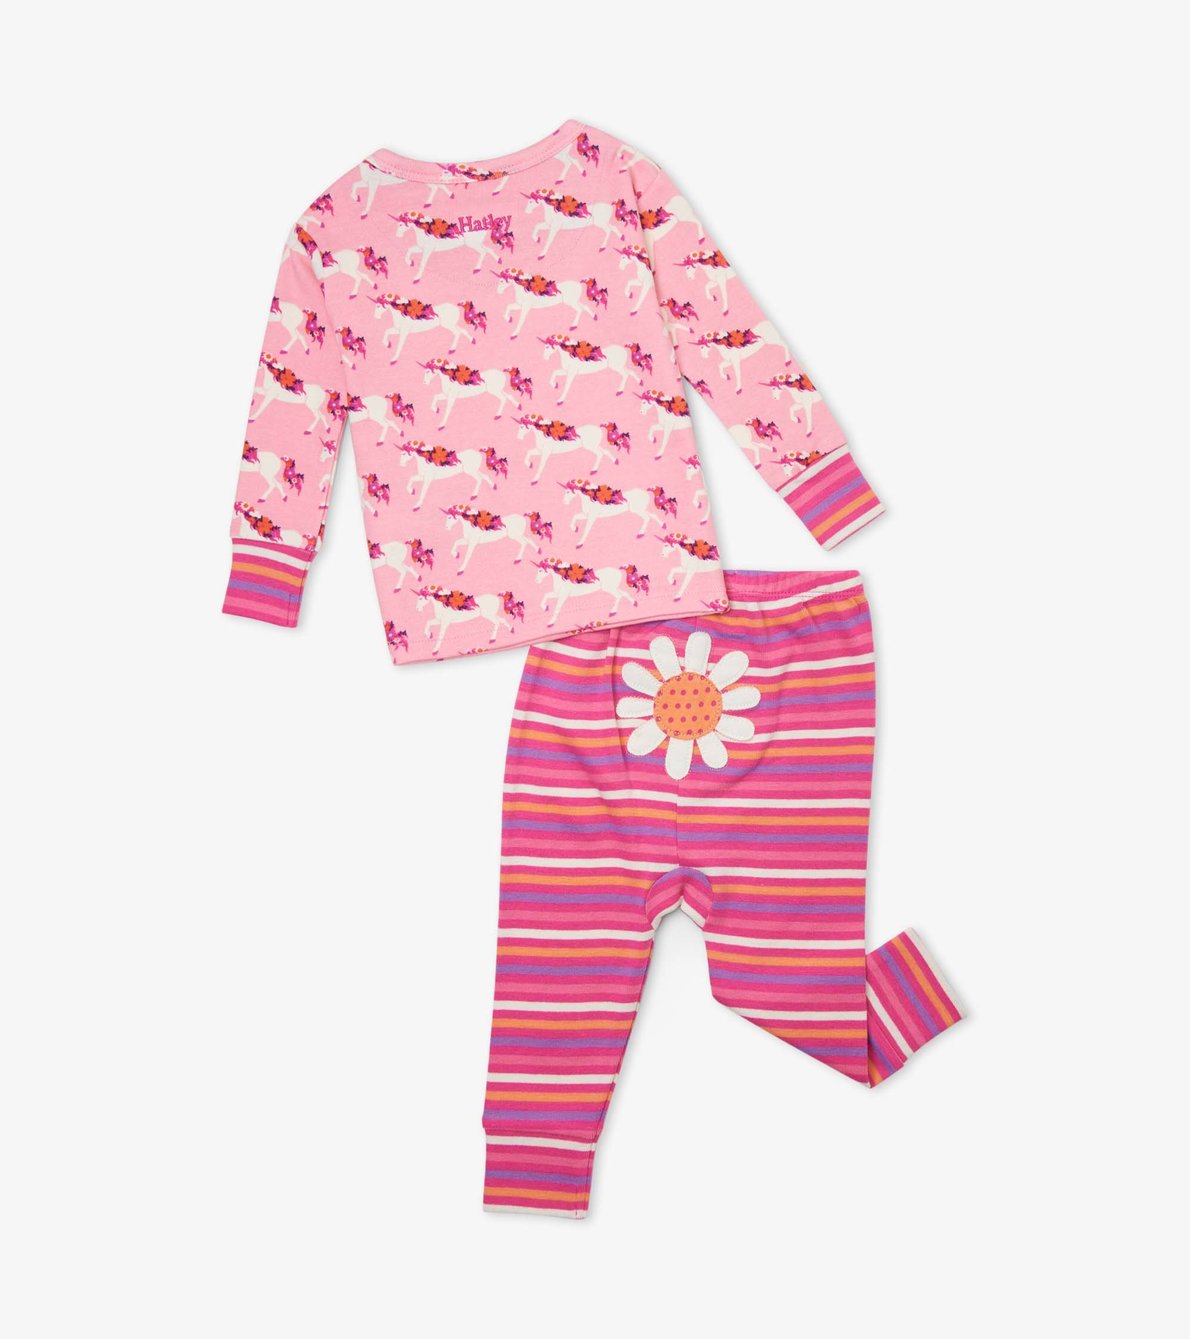 View larger image of Floral Unicorns Organic Cotton Baby Pajama Set